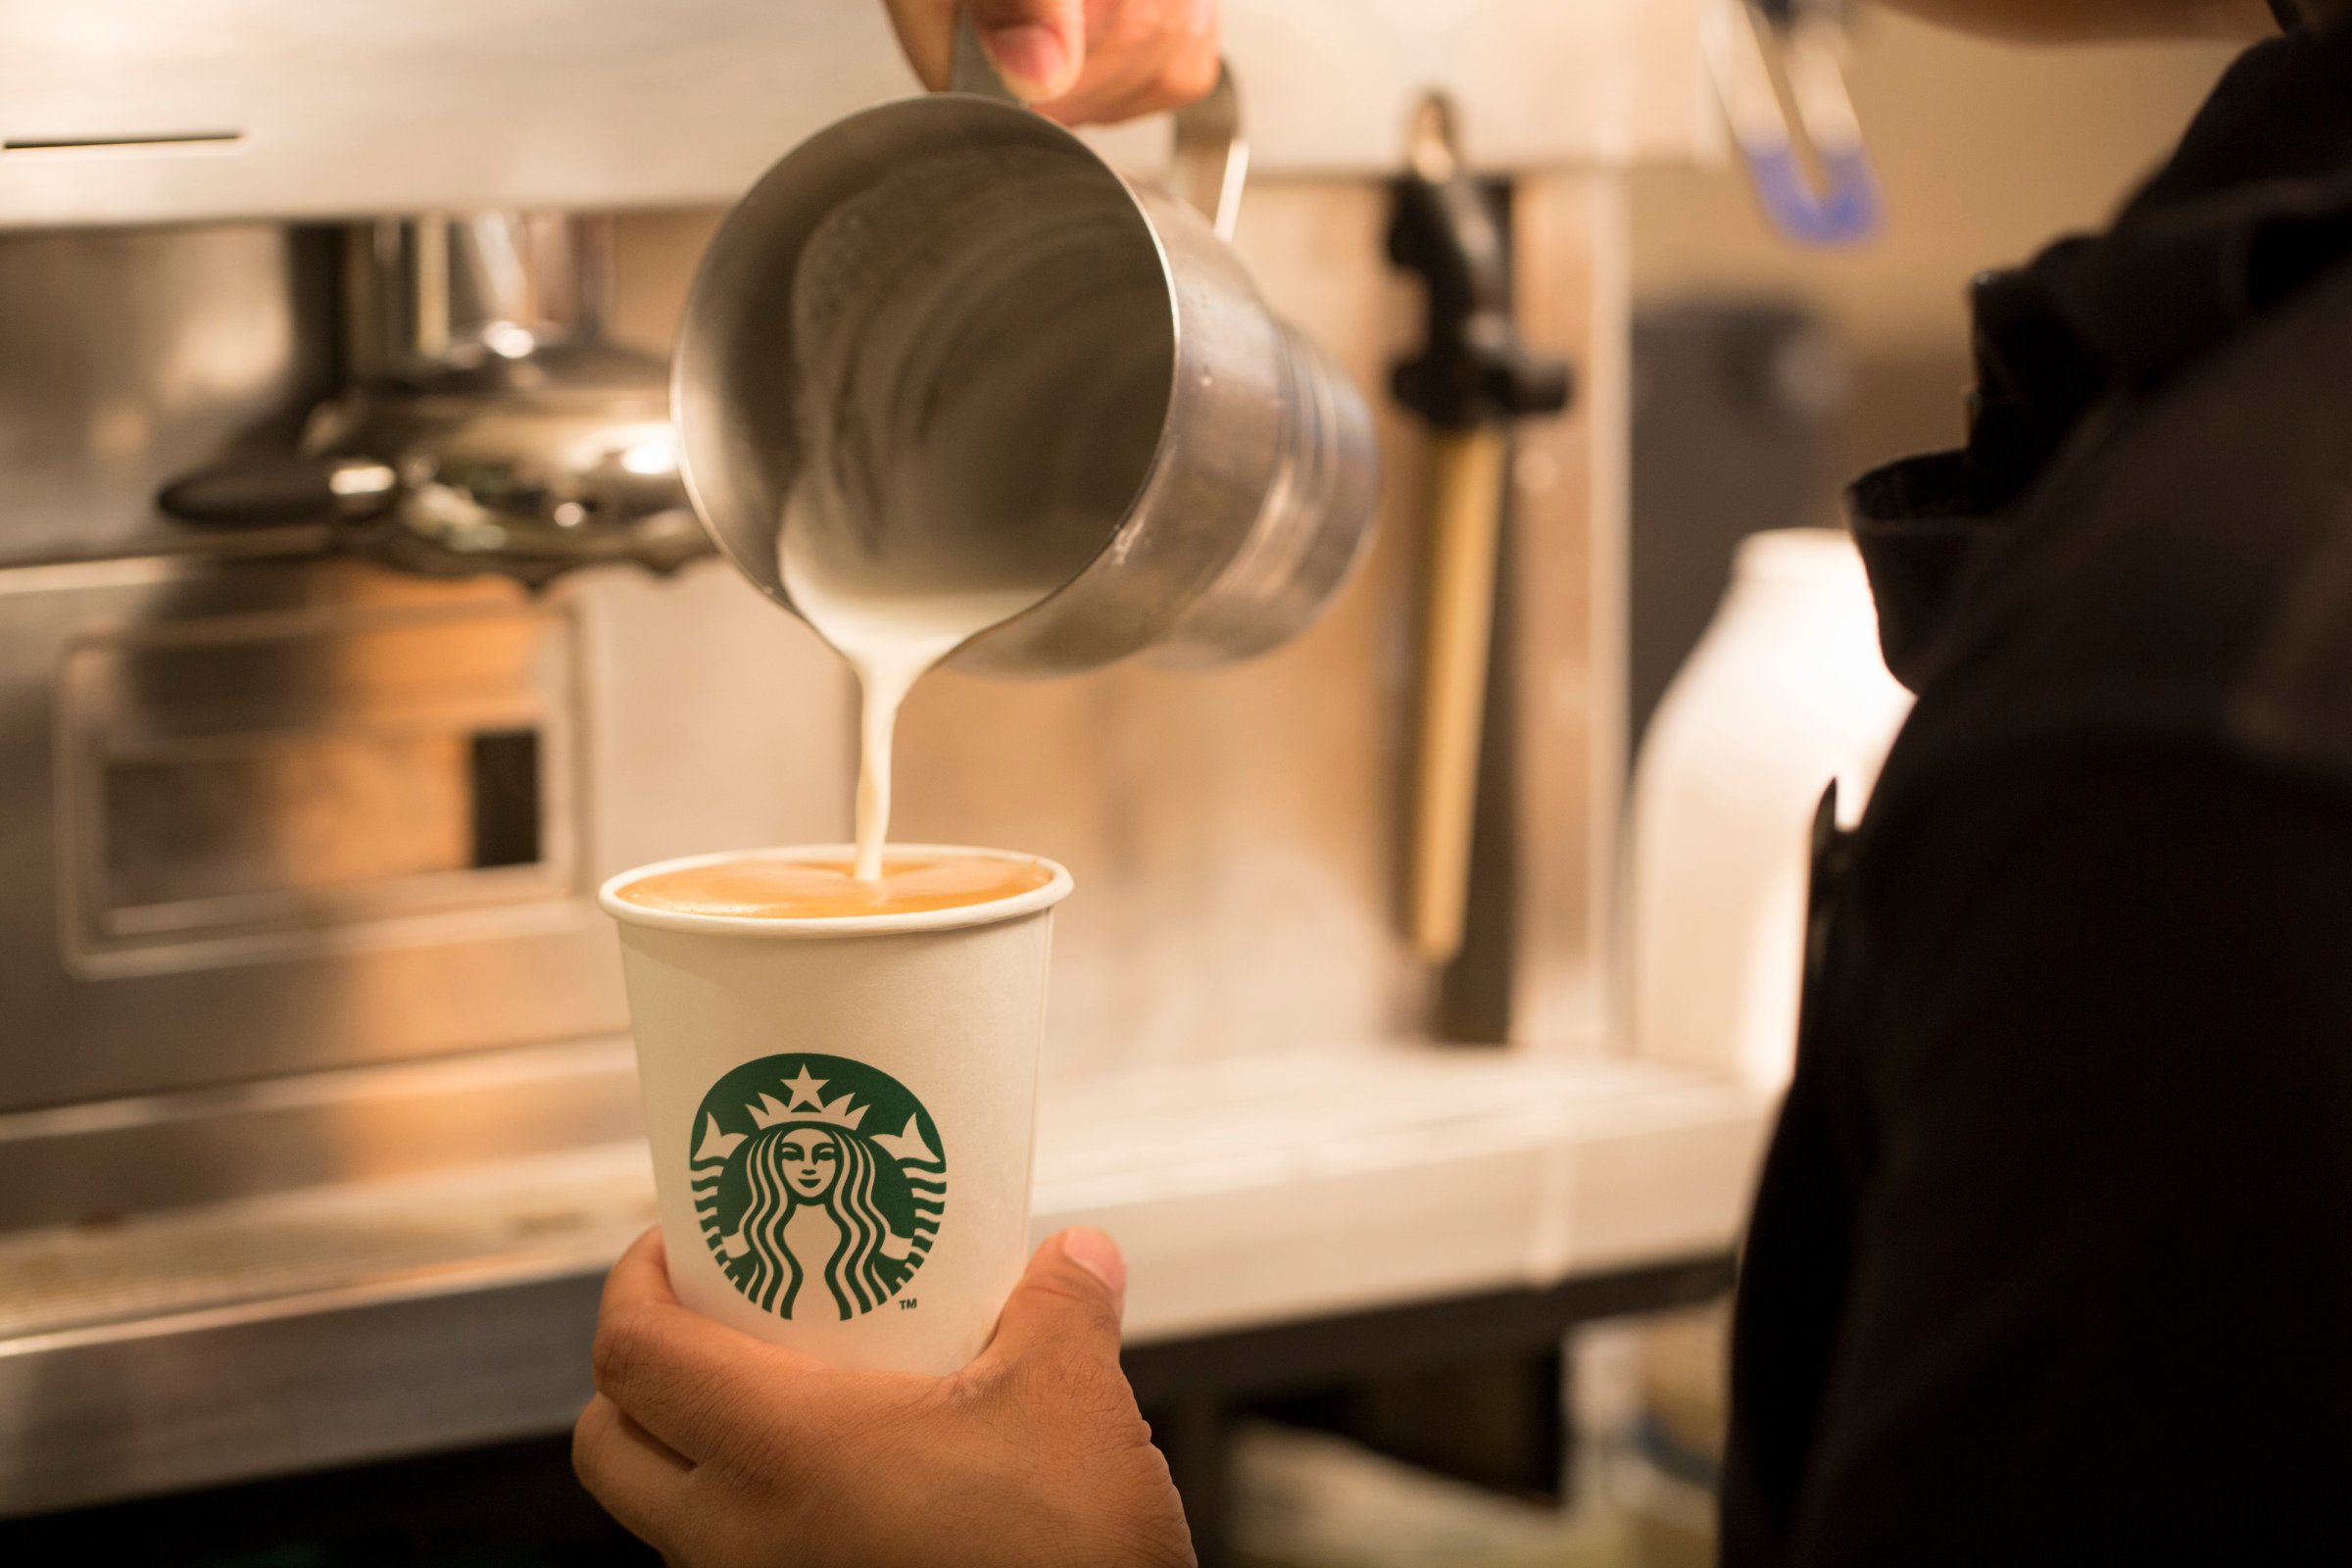 An employee pours milk into a cardboard coffee cup inside a Starbucks Corp. coffee shop in London, U.K., on Monday, Jun. 9, 2014.